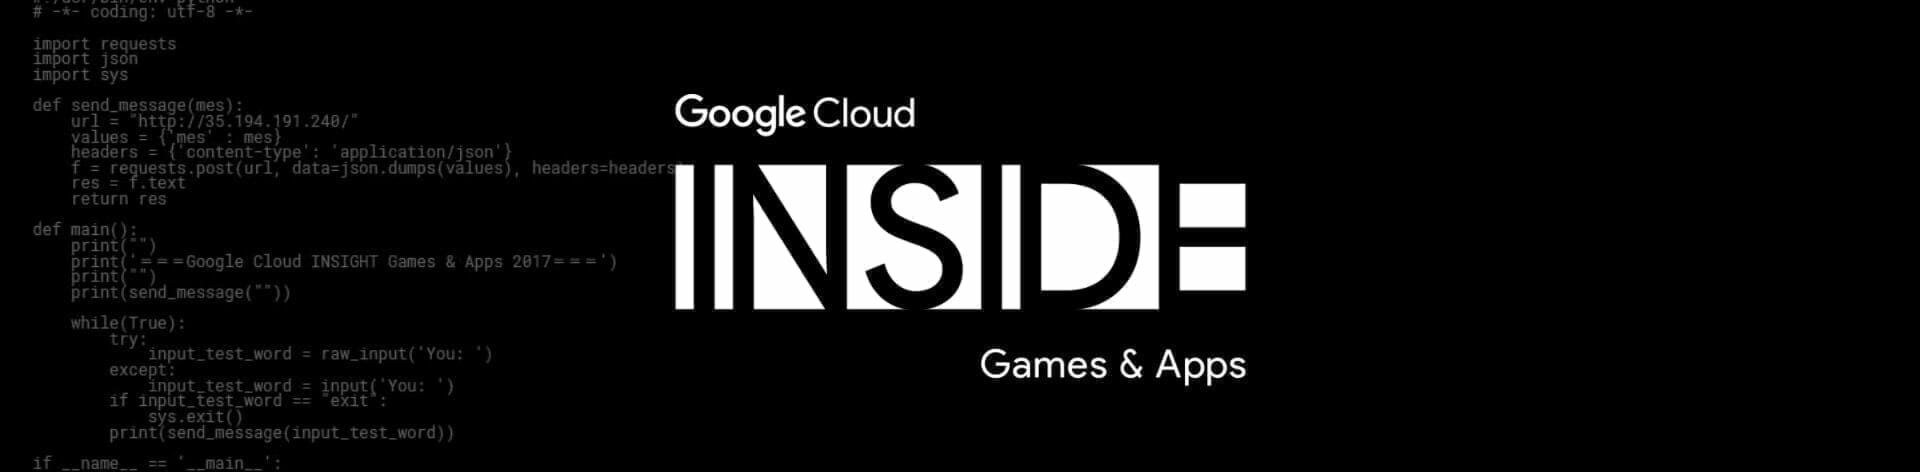 Google Cloud INSIDE Games & Apps